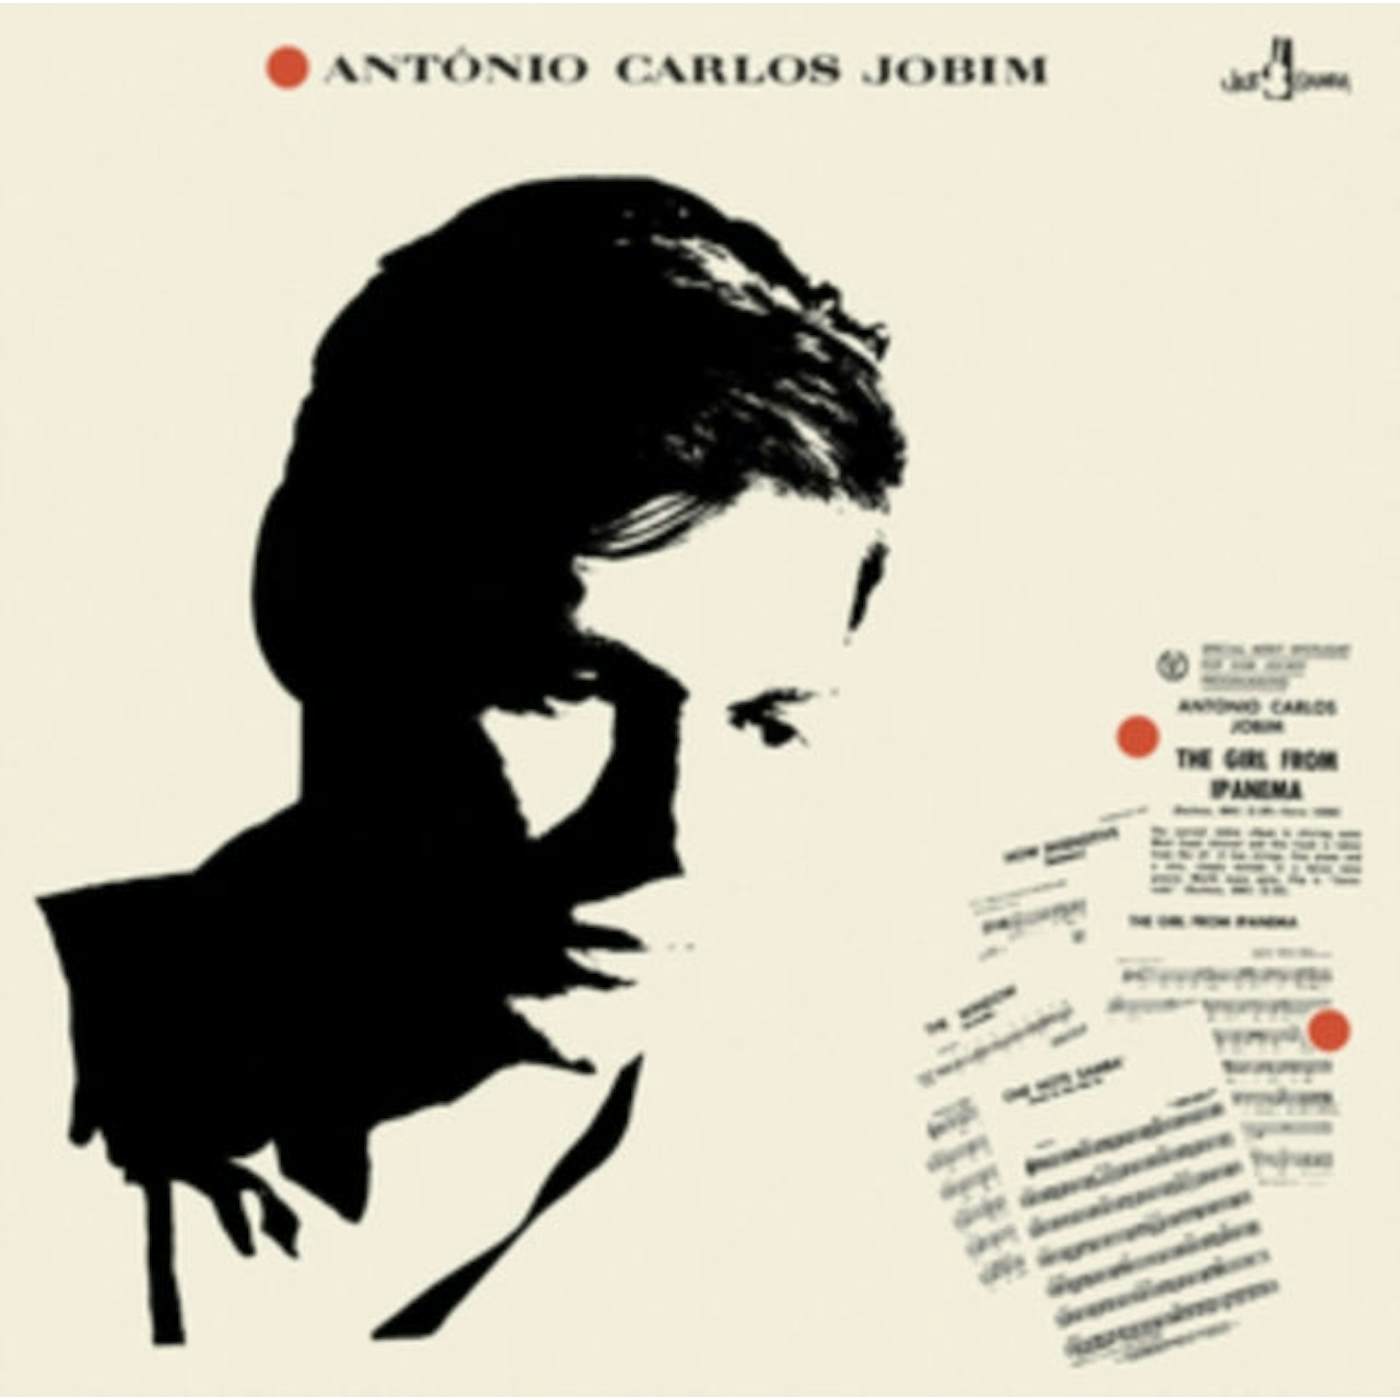 Antônio Carlos Jobim LP - The Girl From Ipanema (Vinyl)